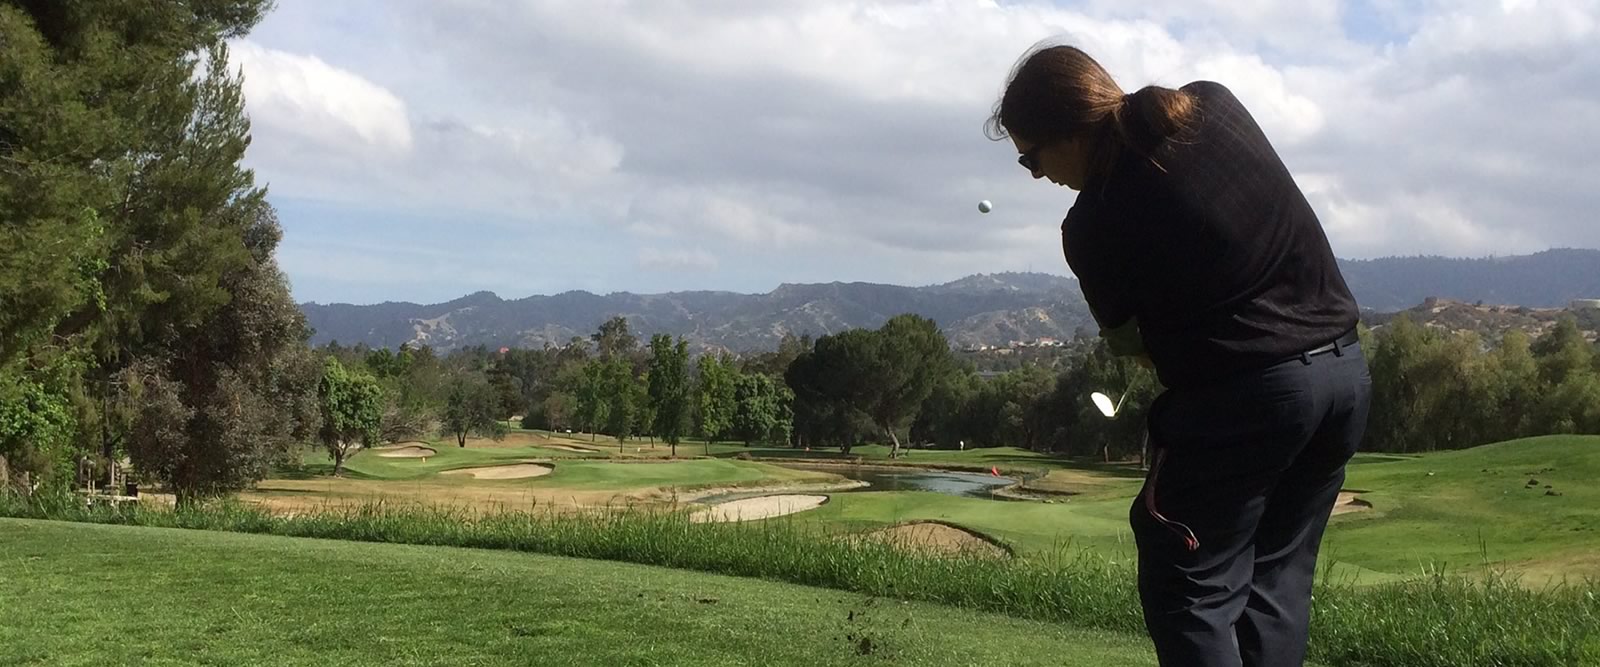 Golf Courses In Hollywood Ca Vista Valencia